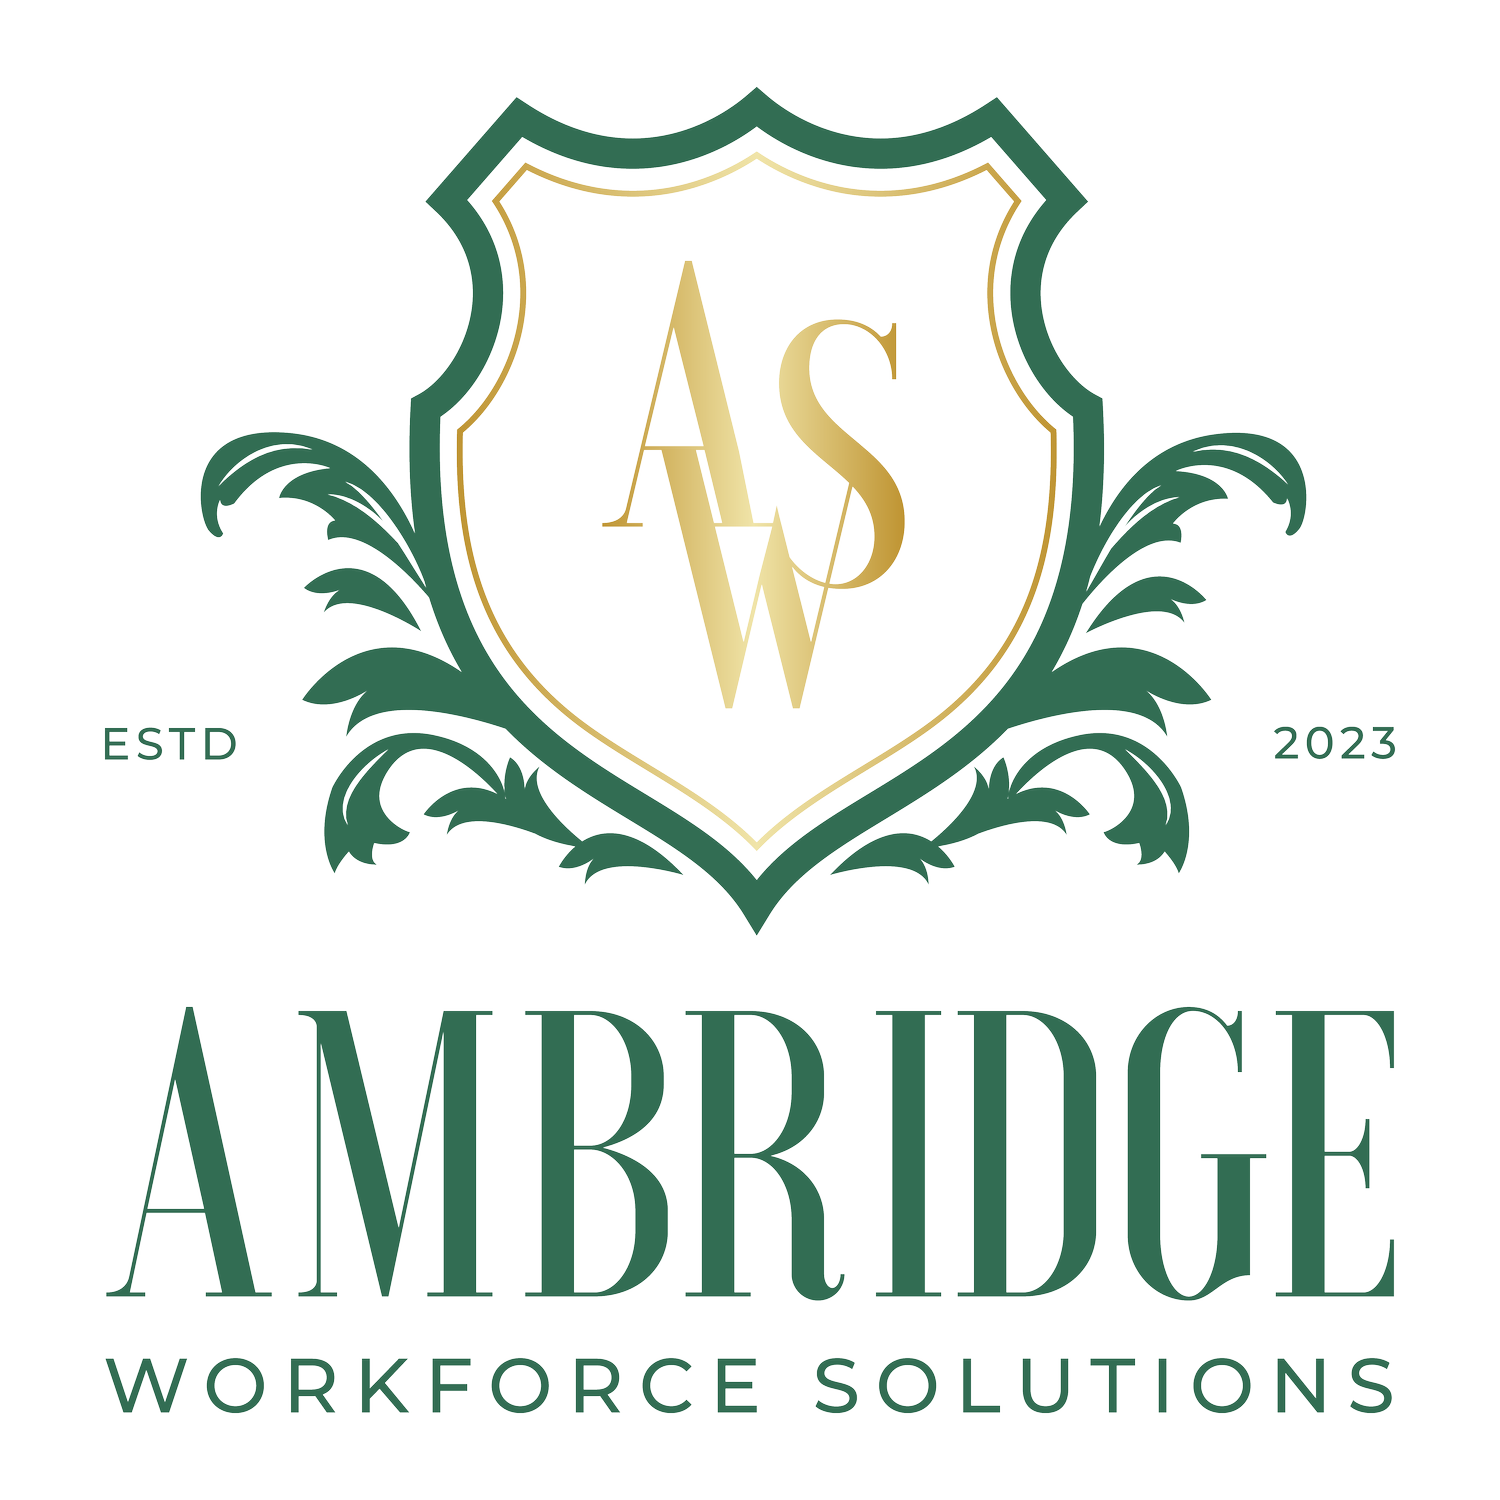 Ambridge Workforce Solutions